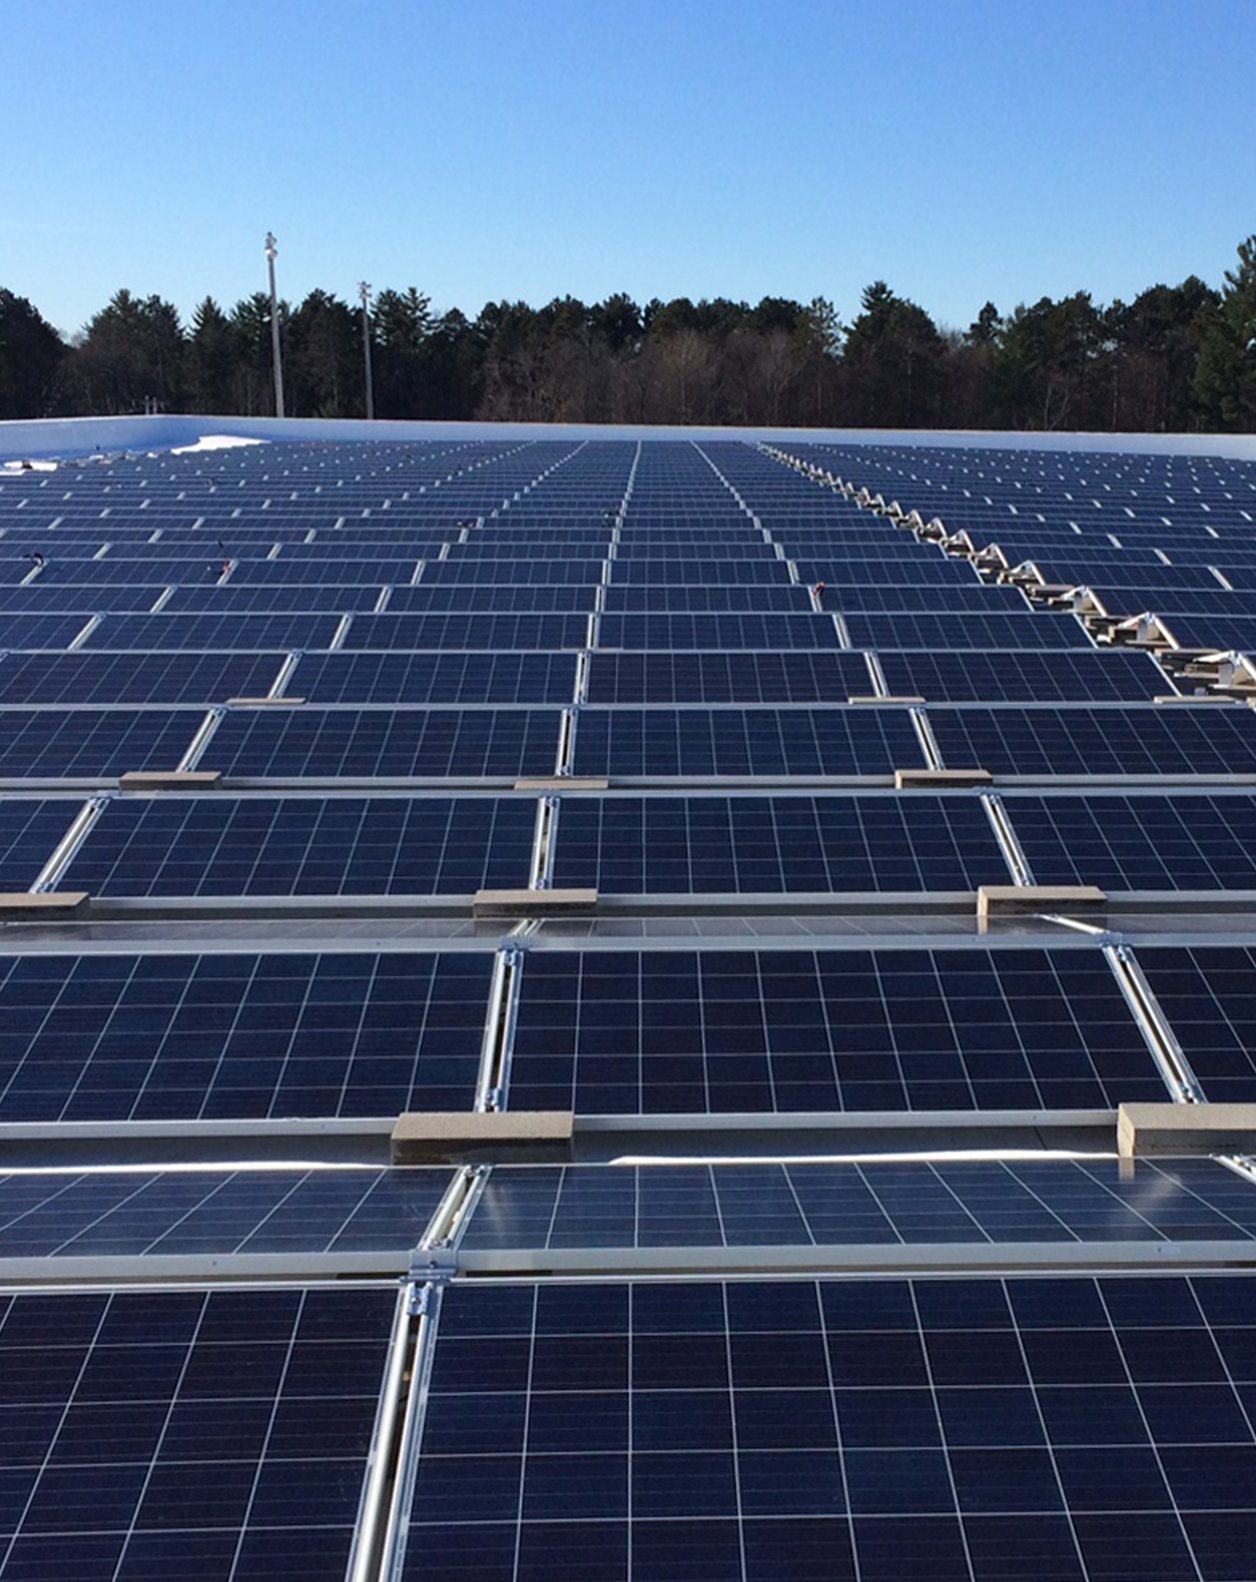 Lakeland Union High School roof-mounted solar PV system